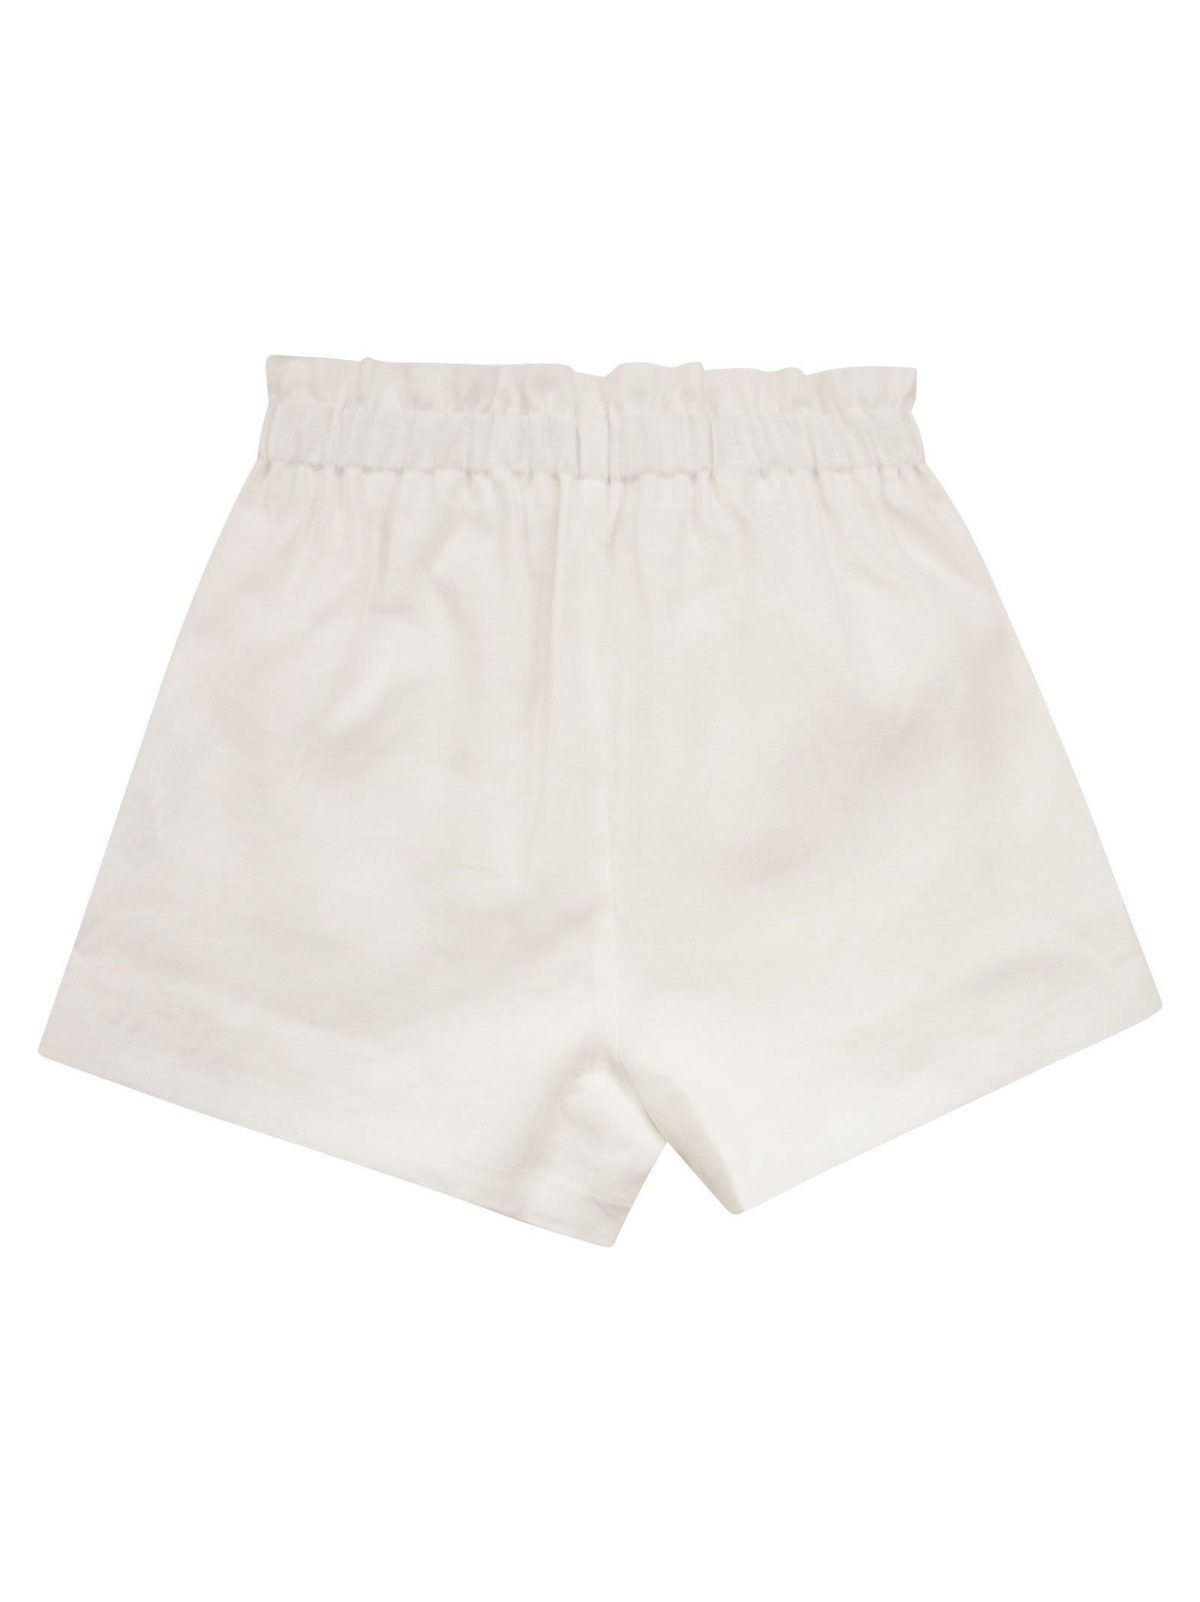 White linen shorts - Bellettini.com